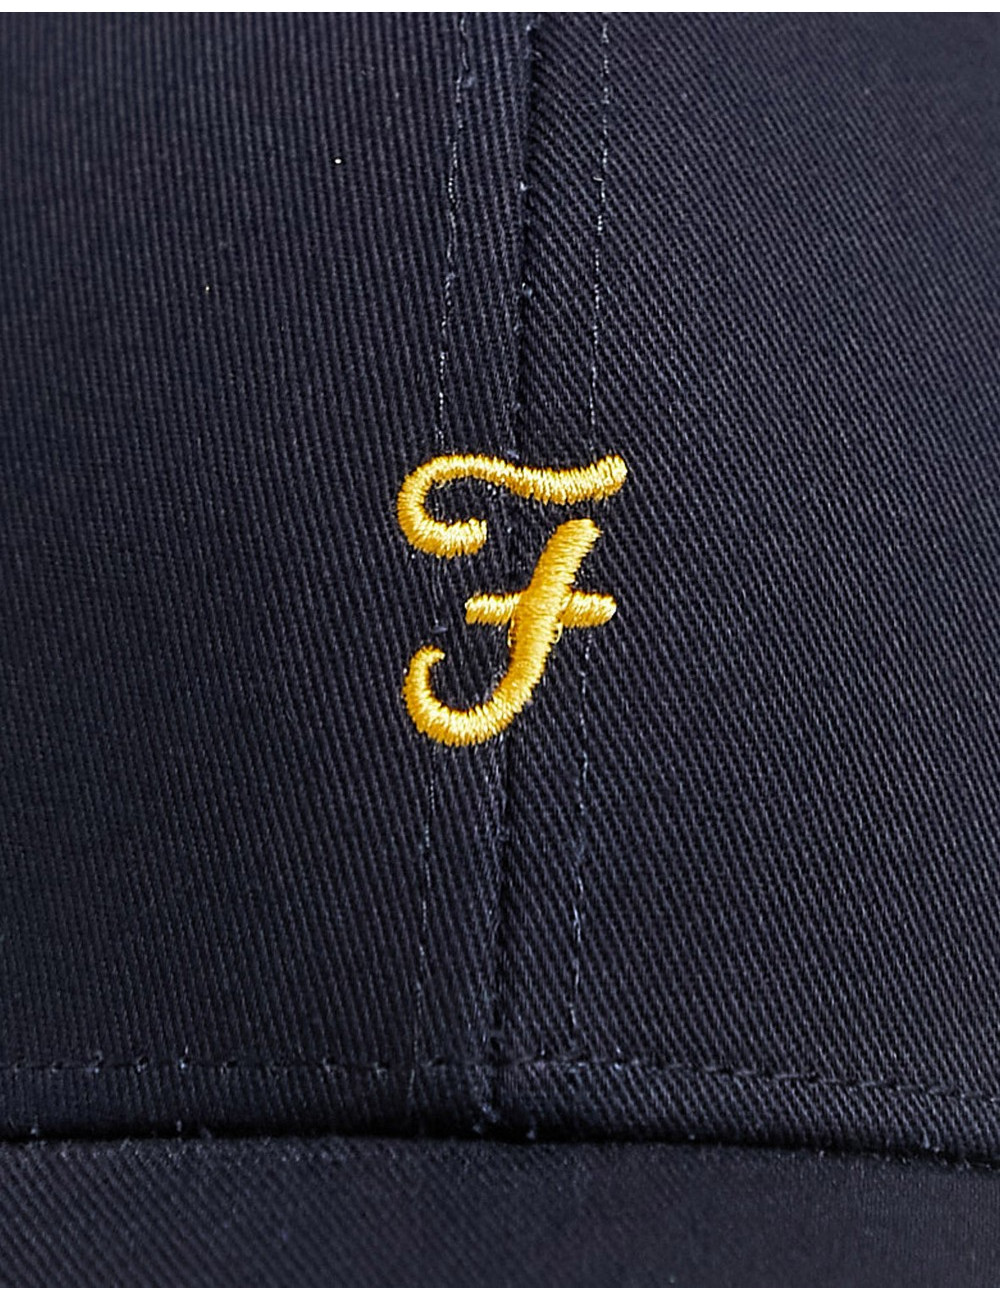 Farah logo cap in navy